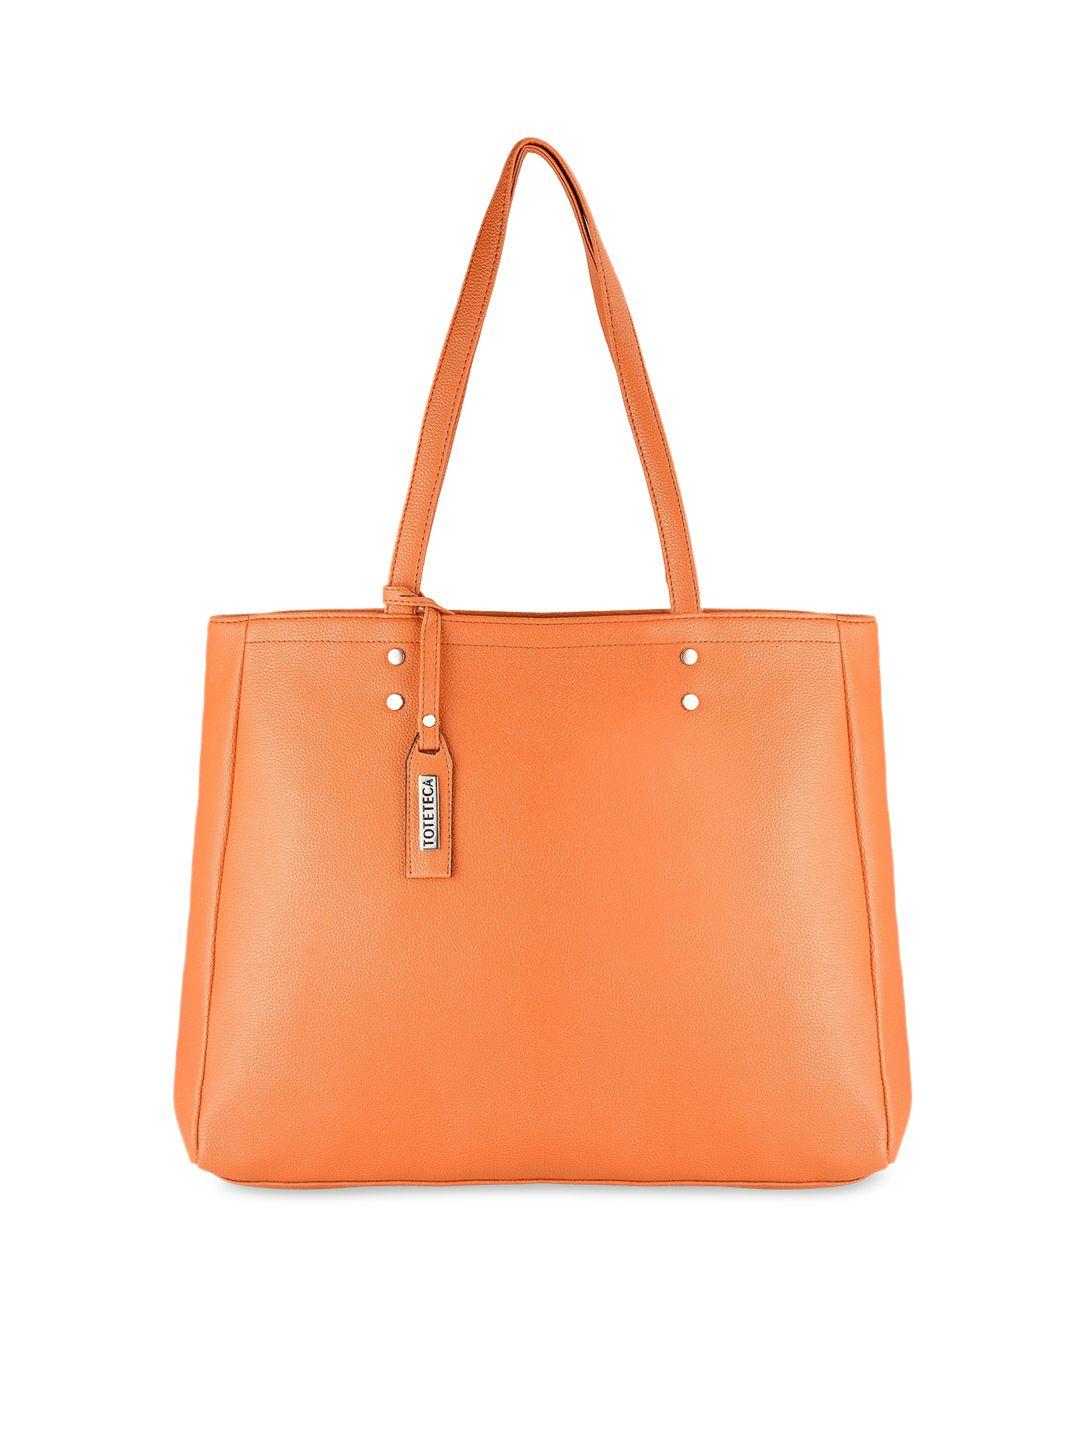 toteteca orange pu structured shoulder bag with tasselled